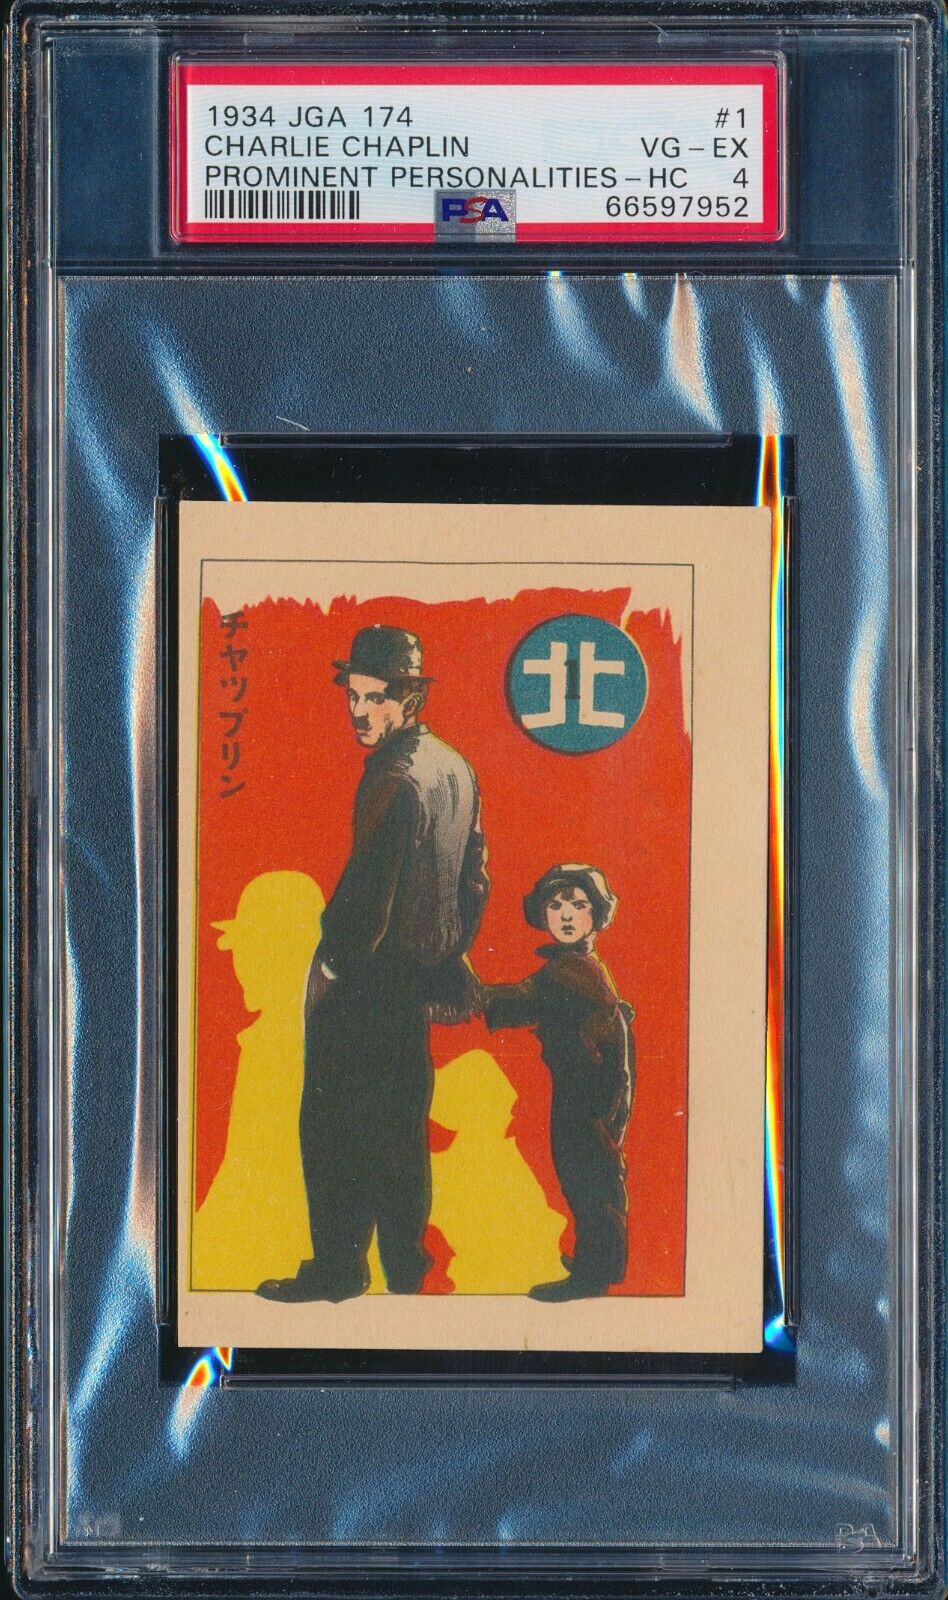 1934 Charlie Chaplin JGA174 Movie Actor Japanese Card PSA 4 Only Graded Example